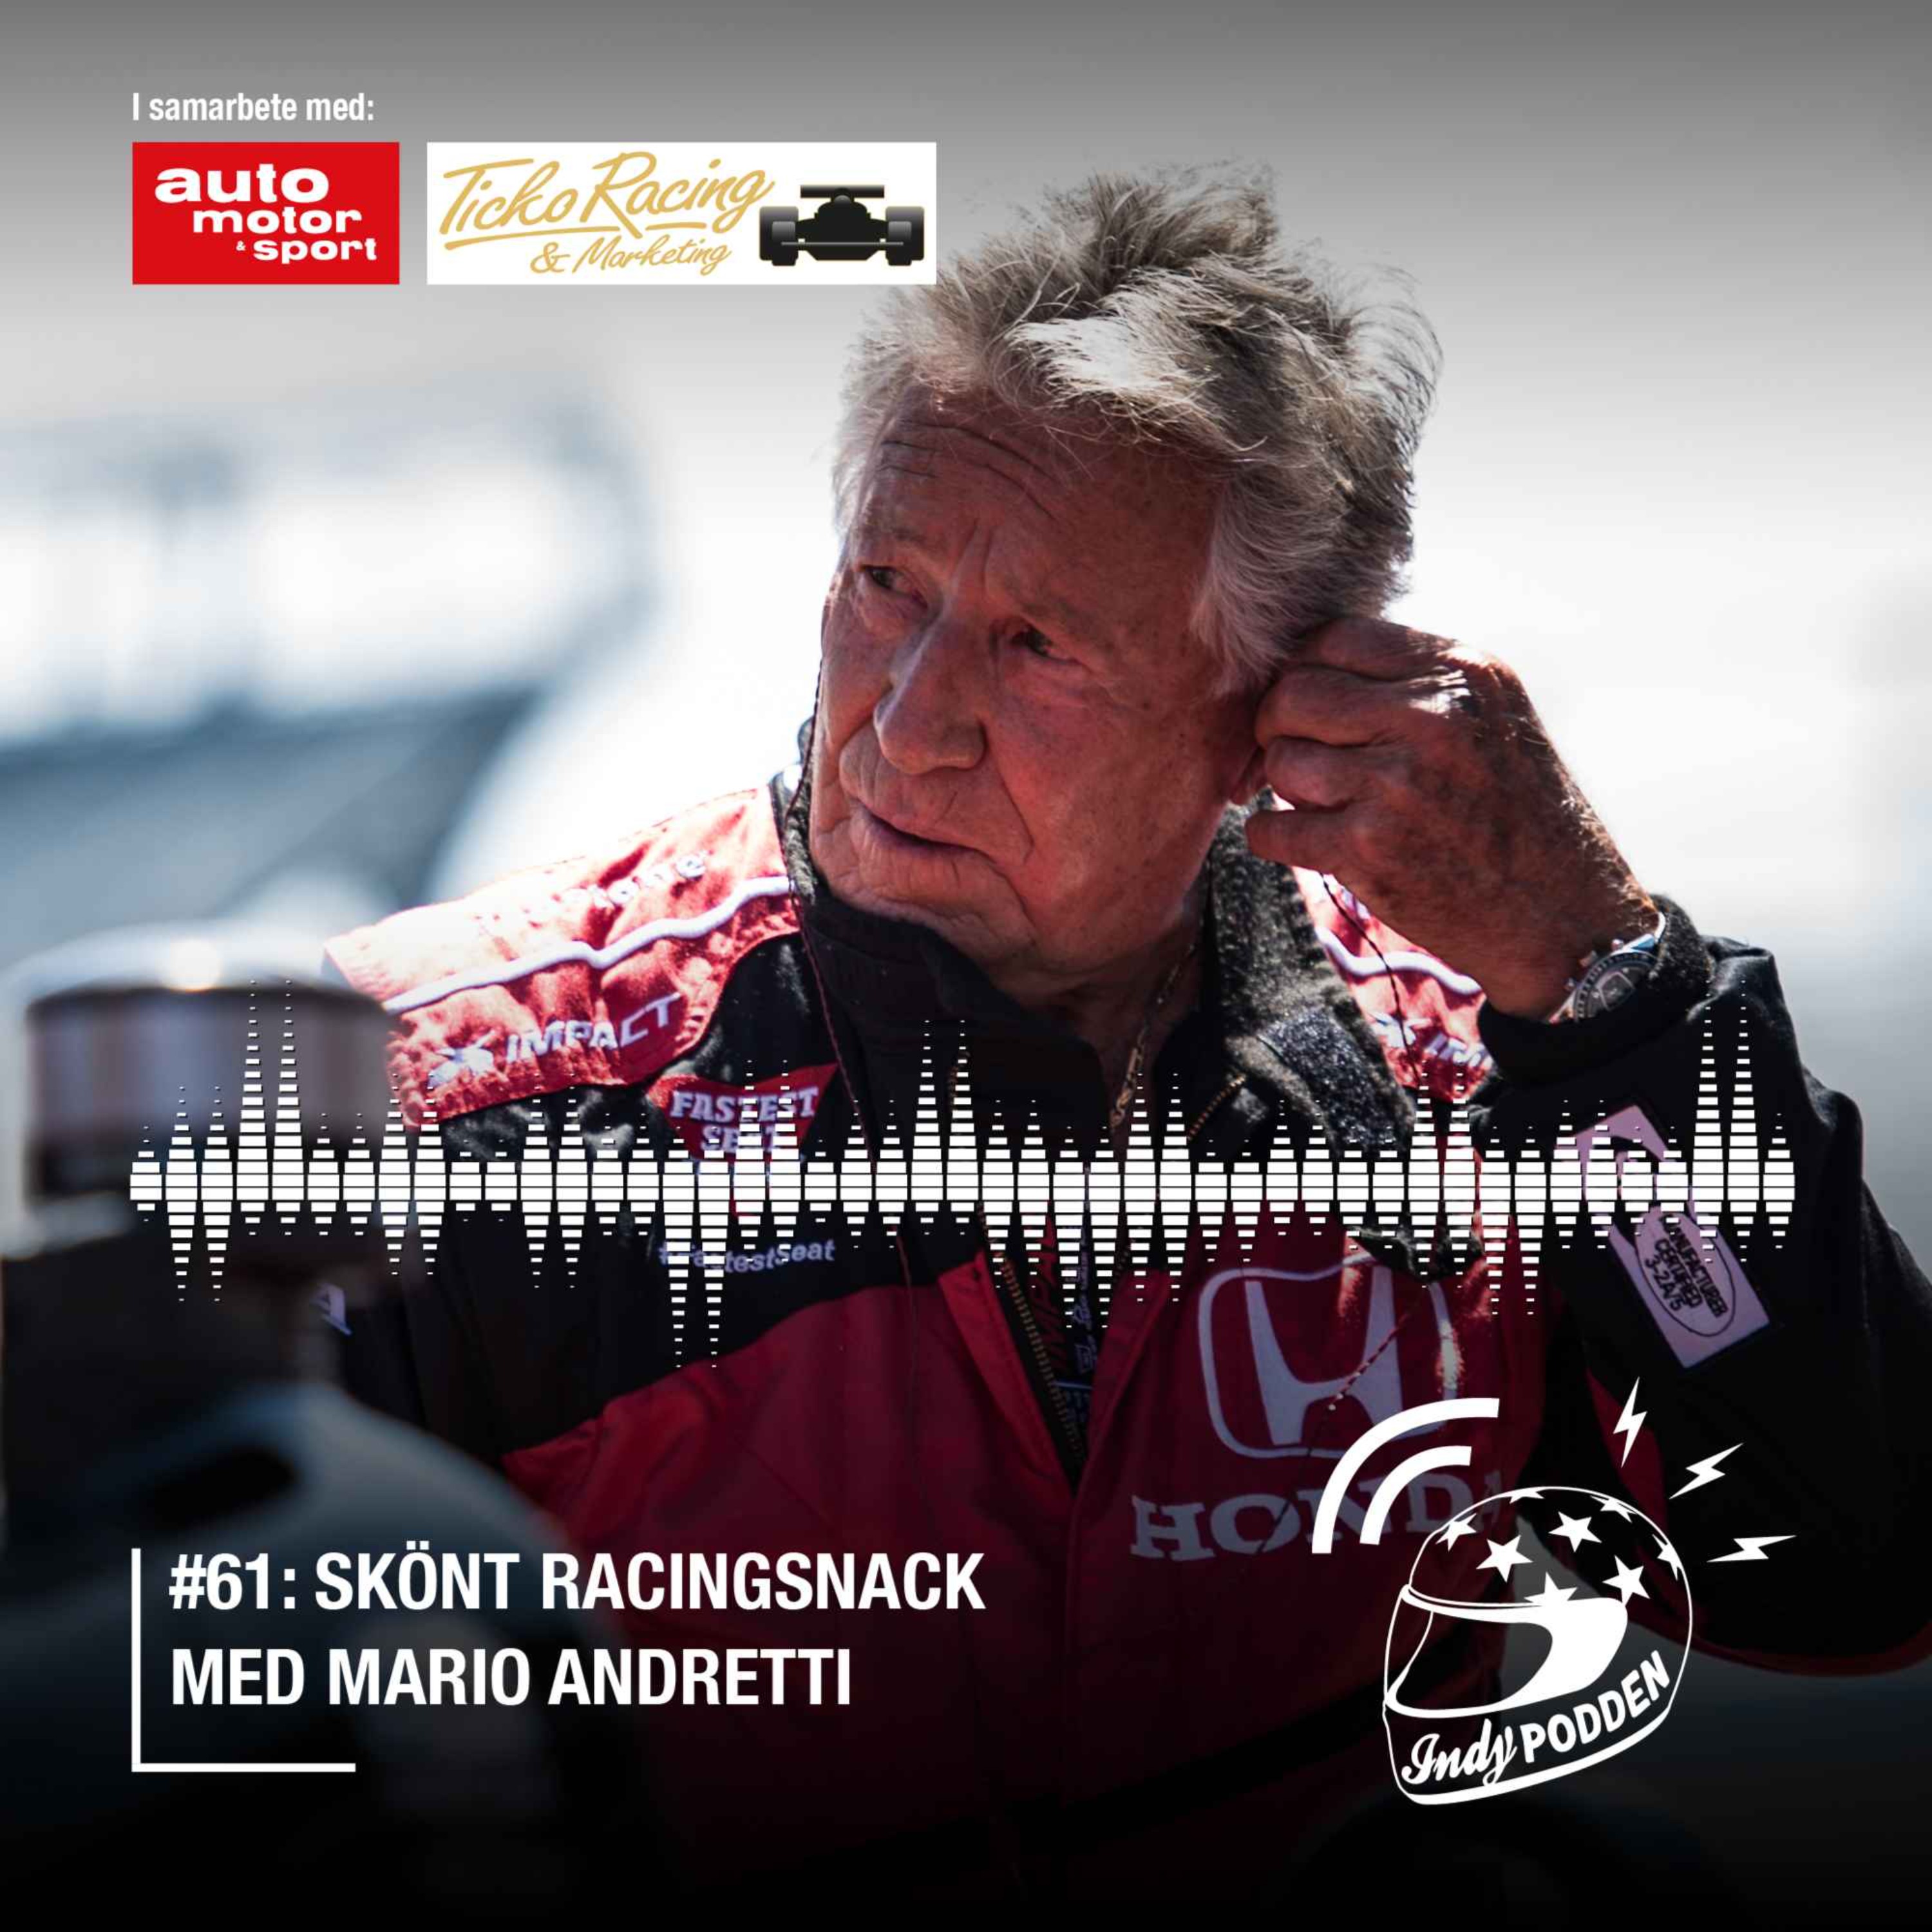 #61: Skönt racingsnack med Mario Andretti